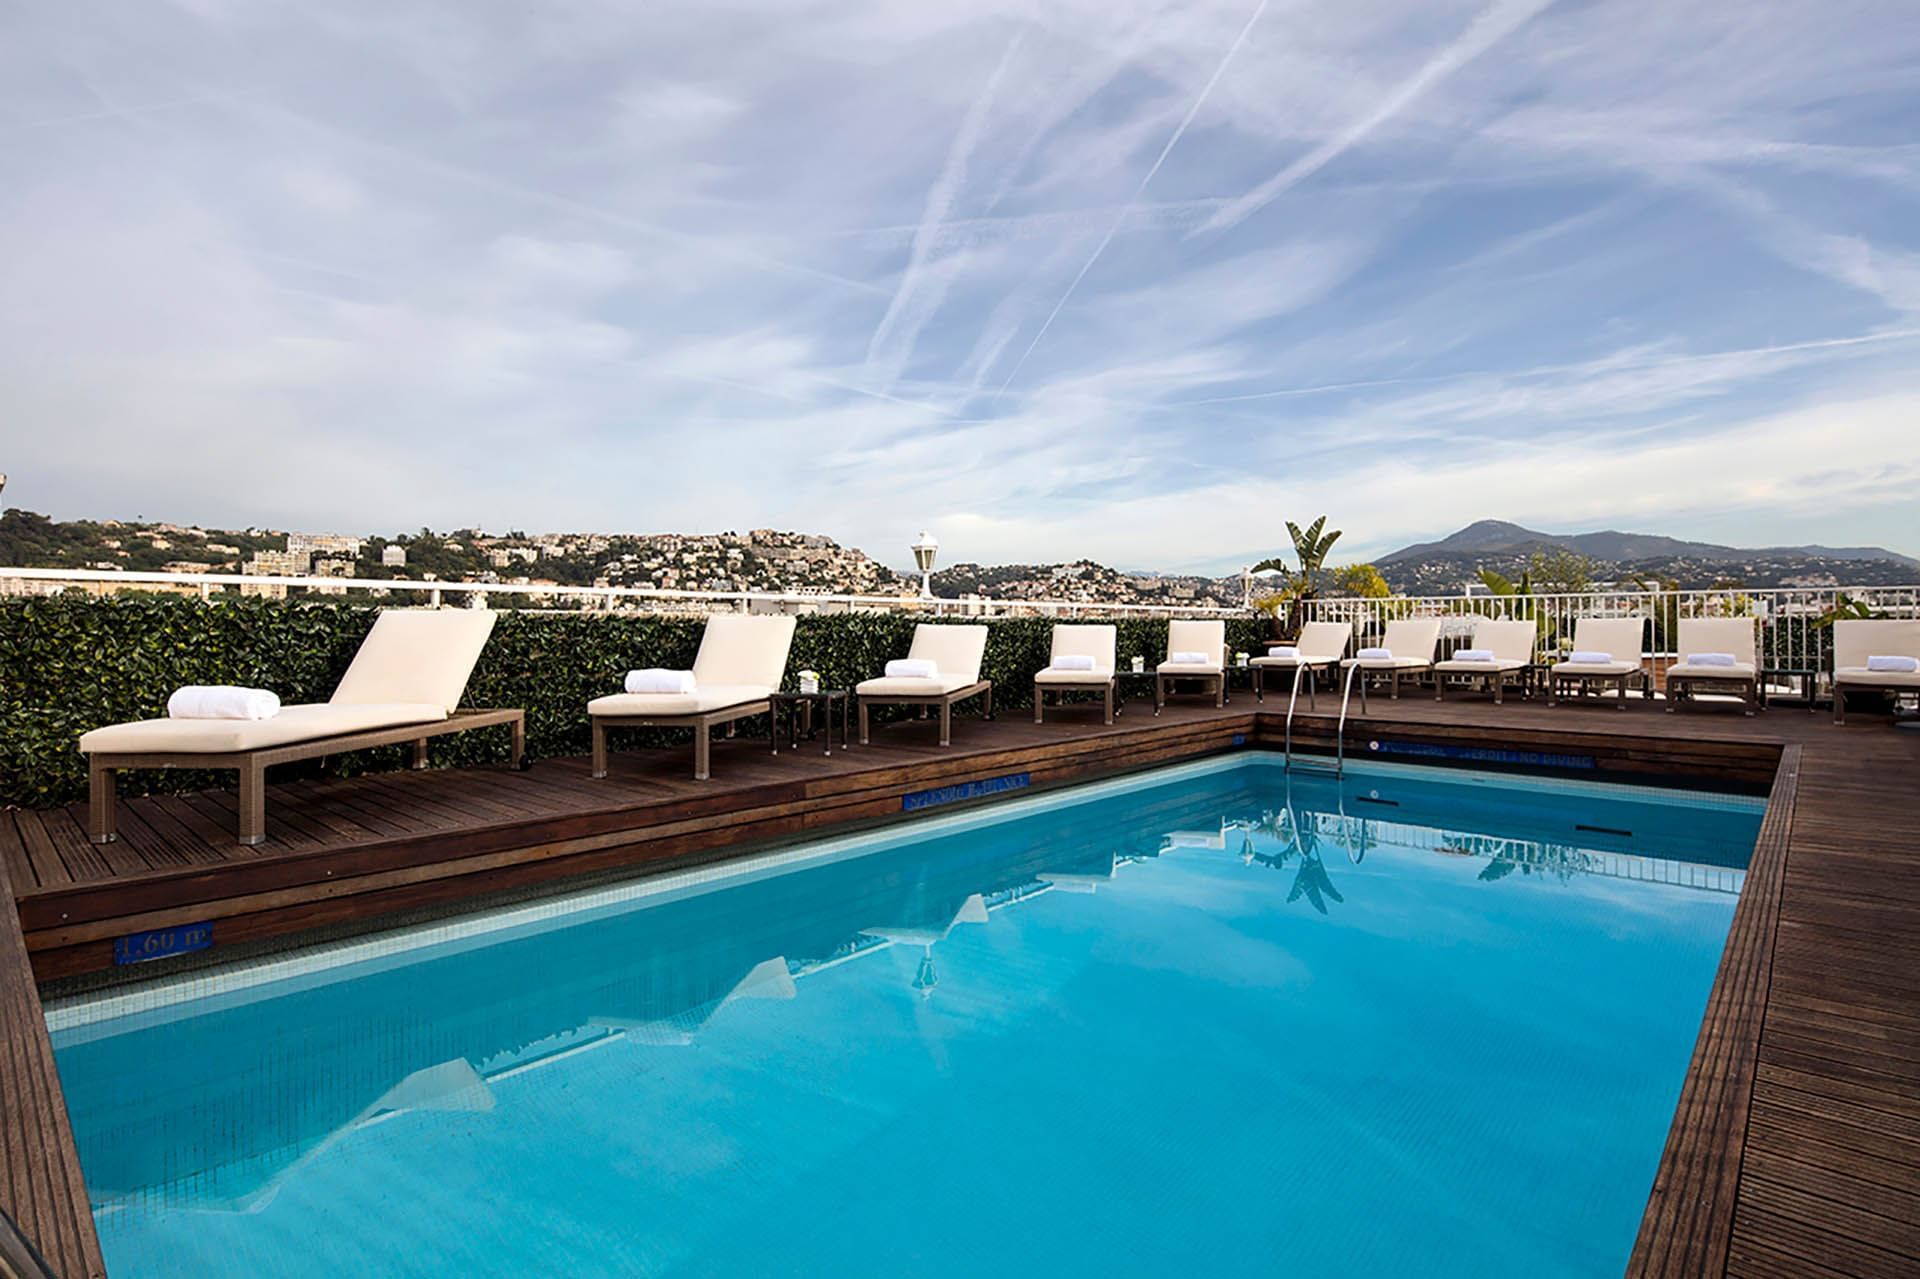 Splendid Hotel and Spa Rooftop Pool